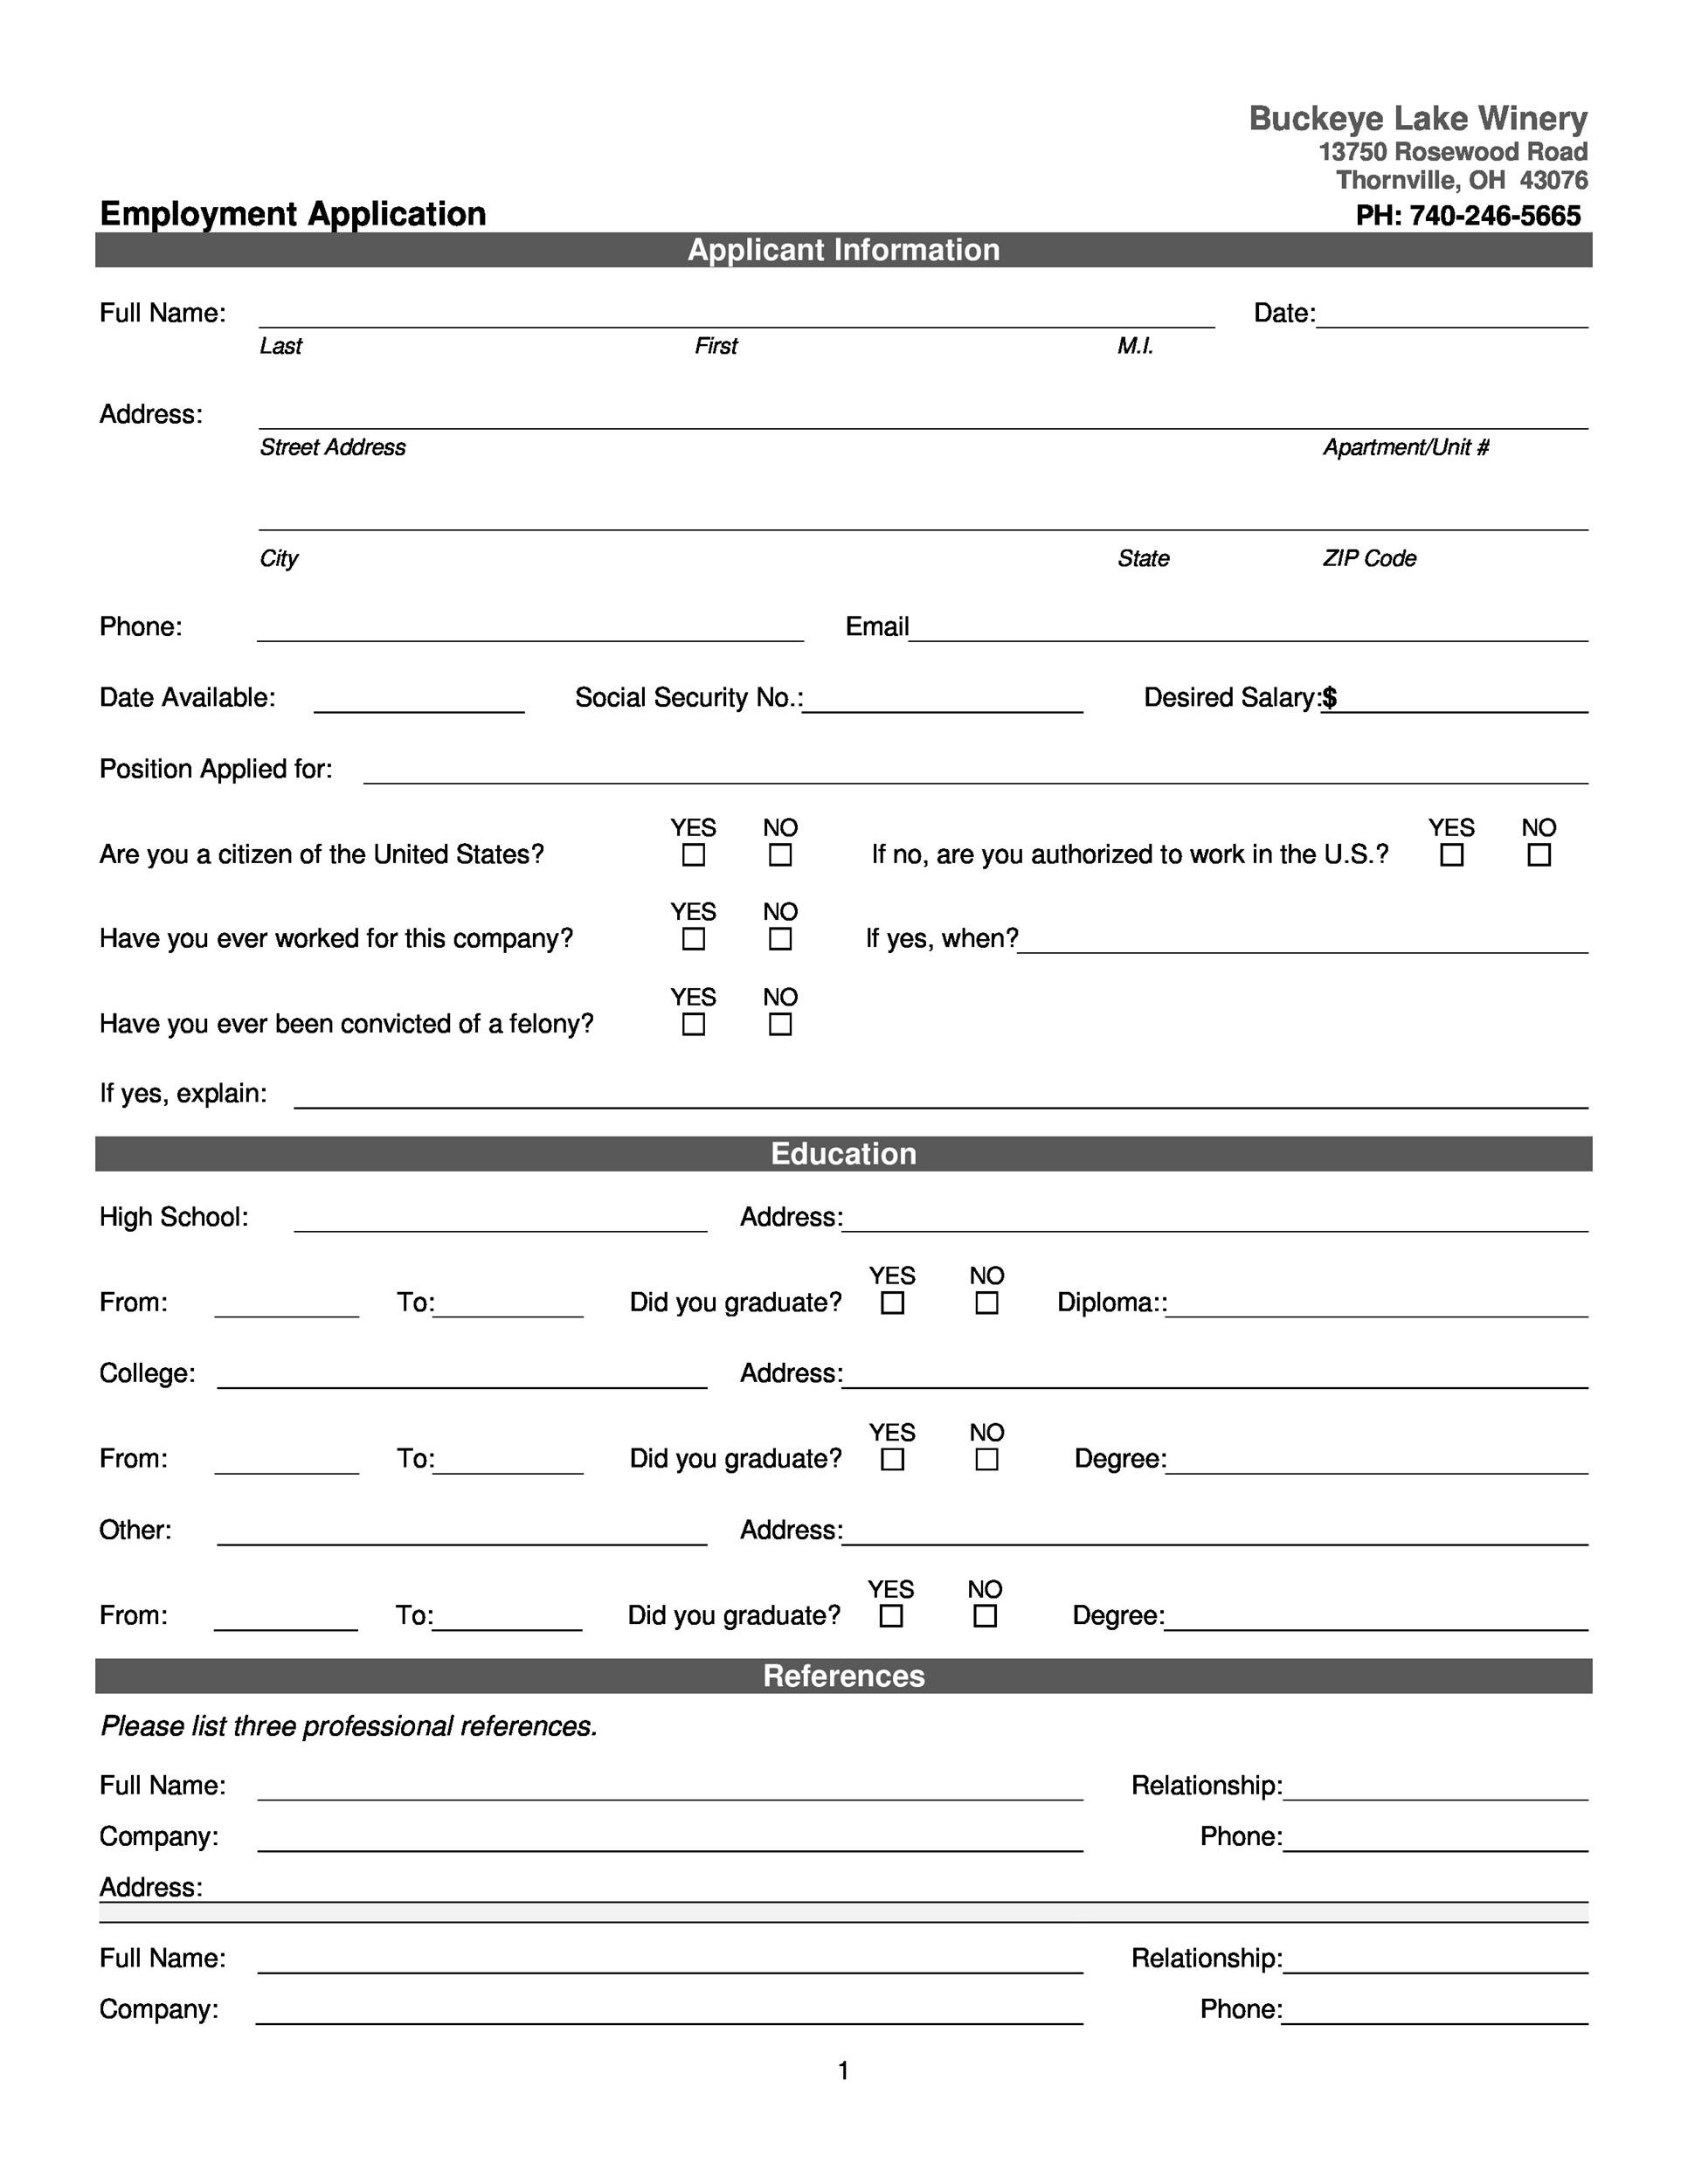 50 Free Employment / Job Application Form Templates [Printable] ᐅ